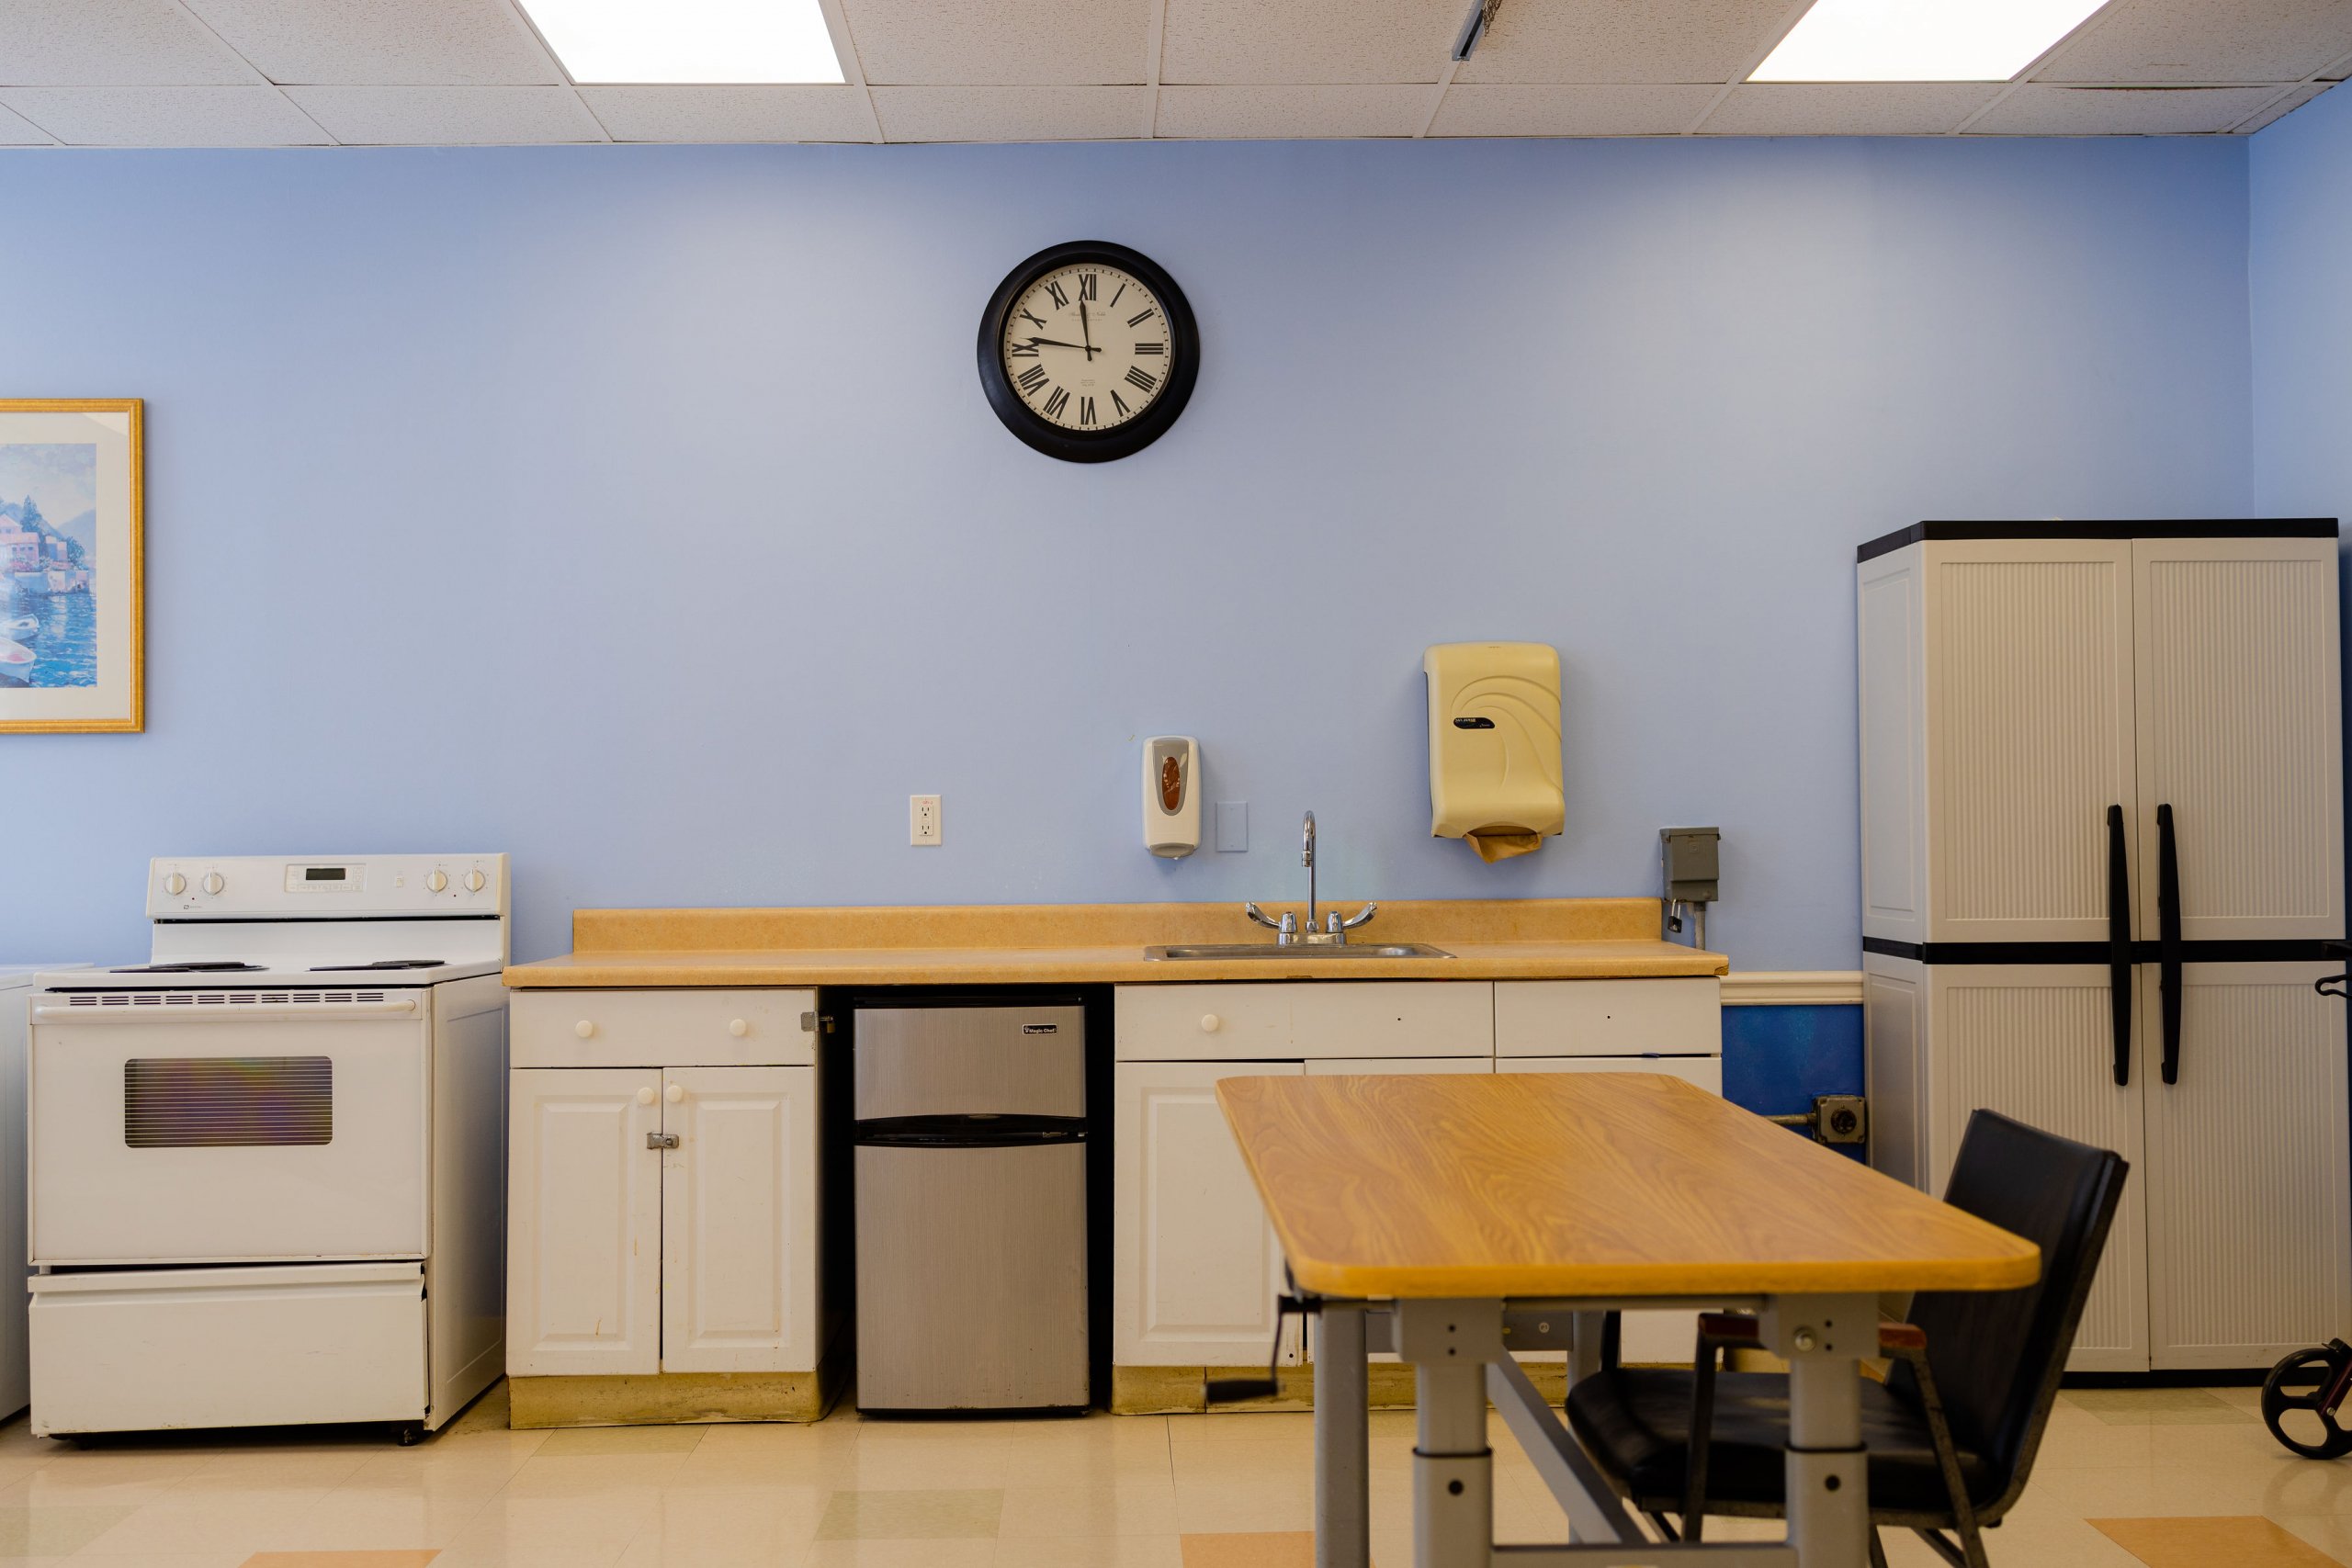 Gallery Interior - Ross Center for Nursing and Rehabilitation